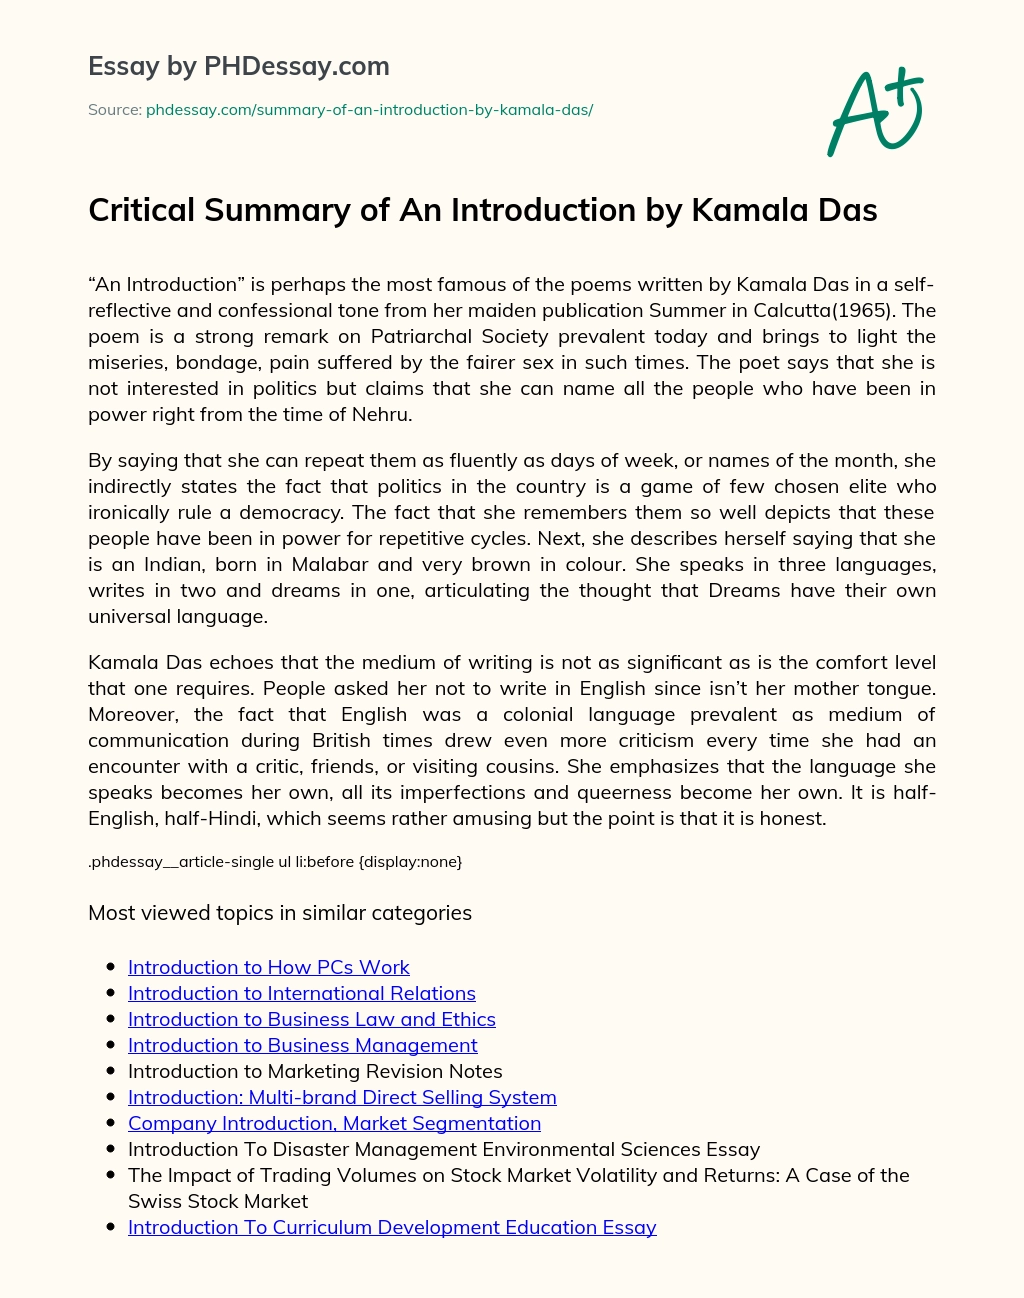 an introduction essay by kamala das